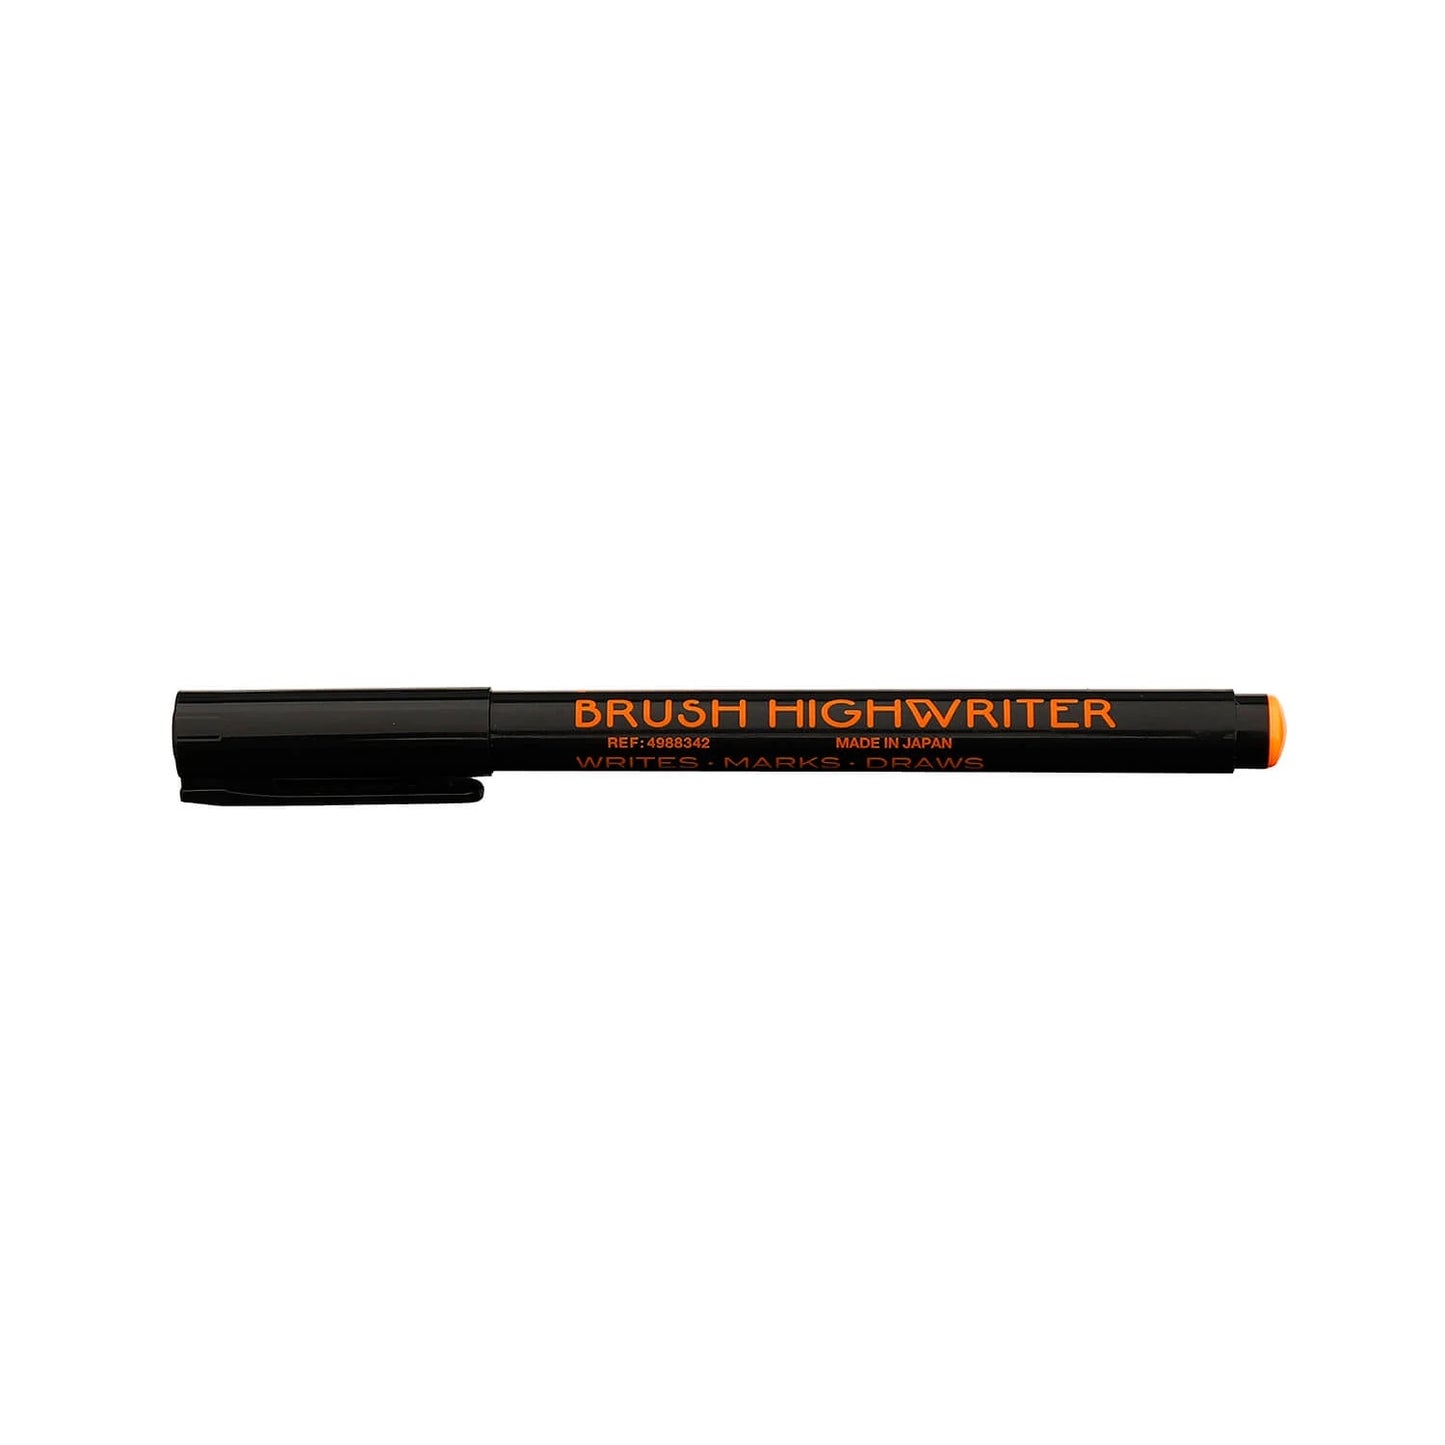 Penco Highlighter Brush Pen in Orange